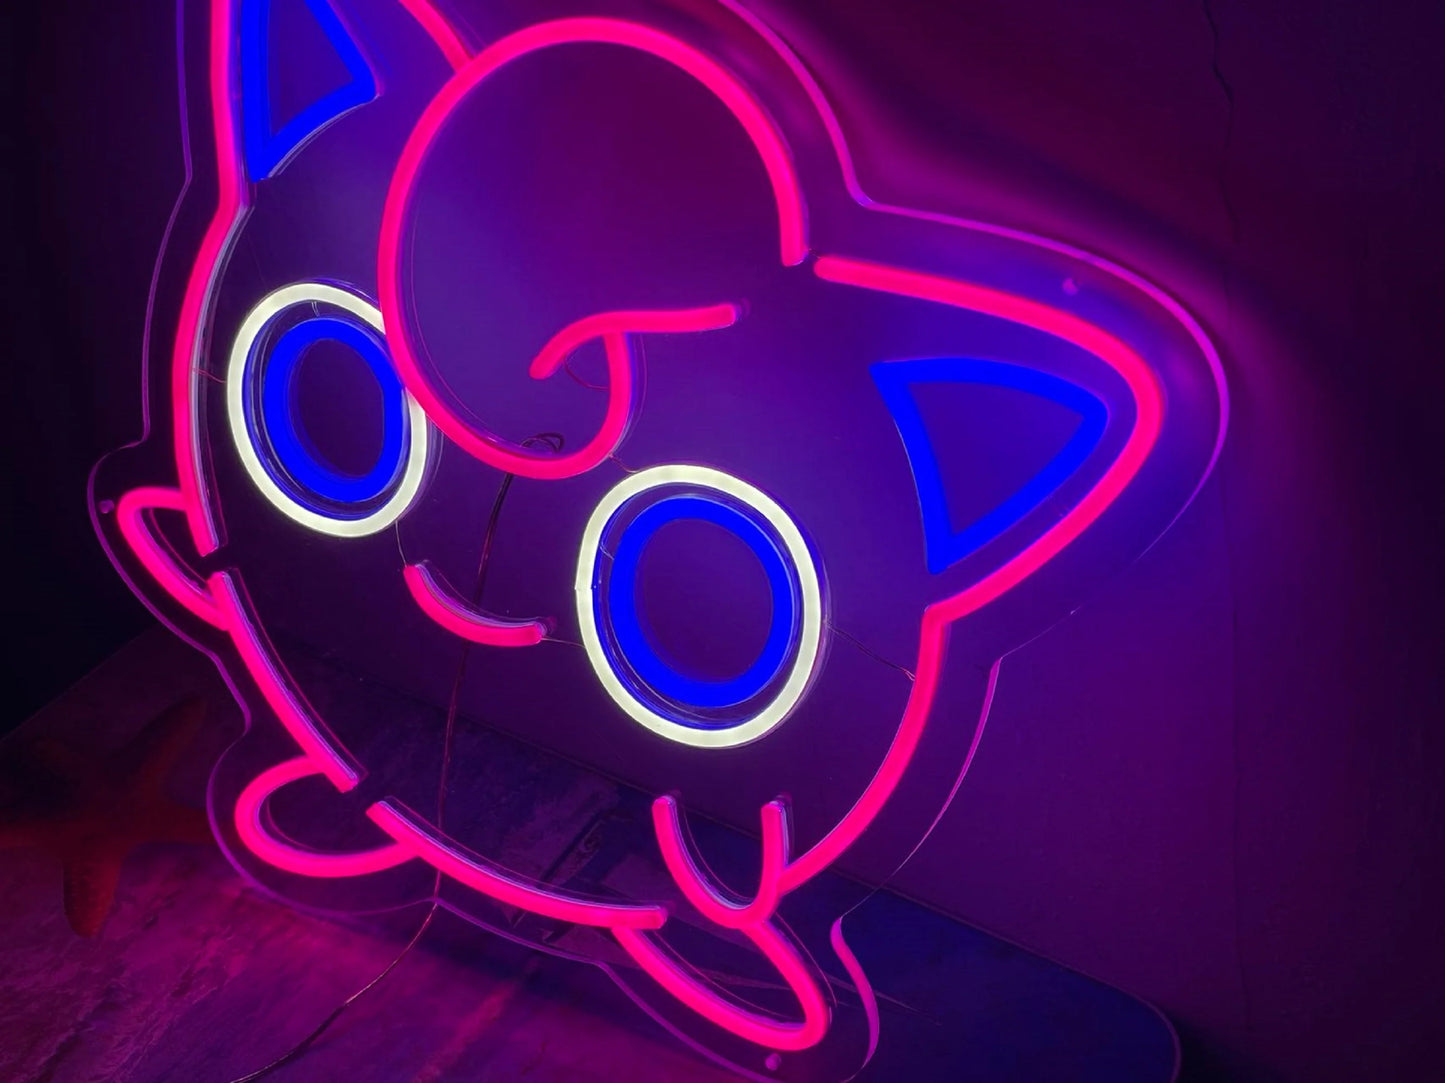 Pokemon Jigglypuff Neon Sign Cute Gift for Kids